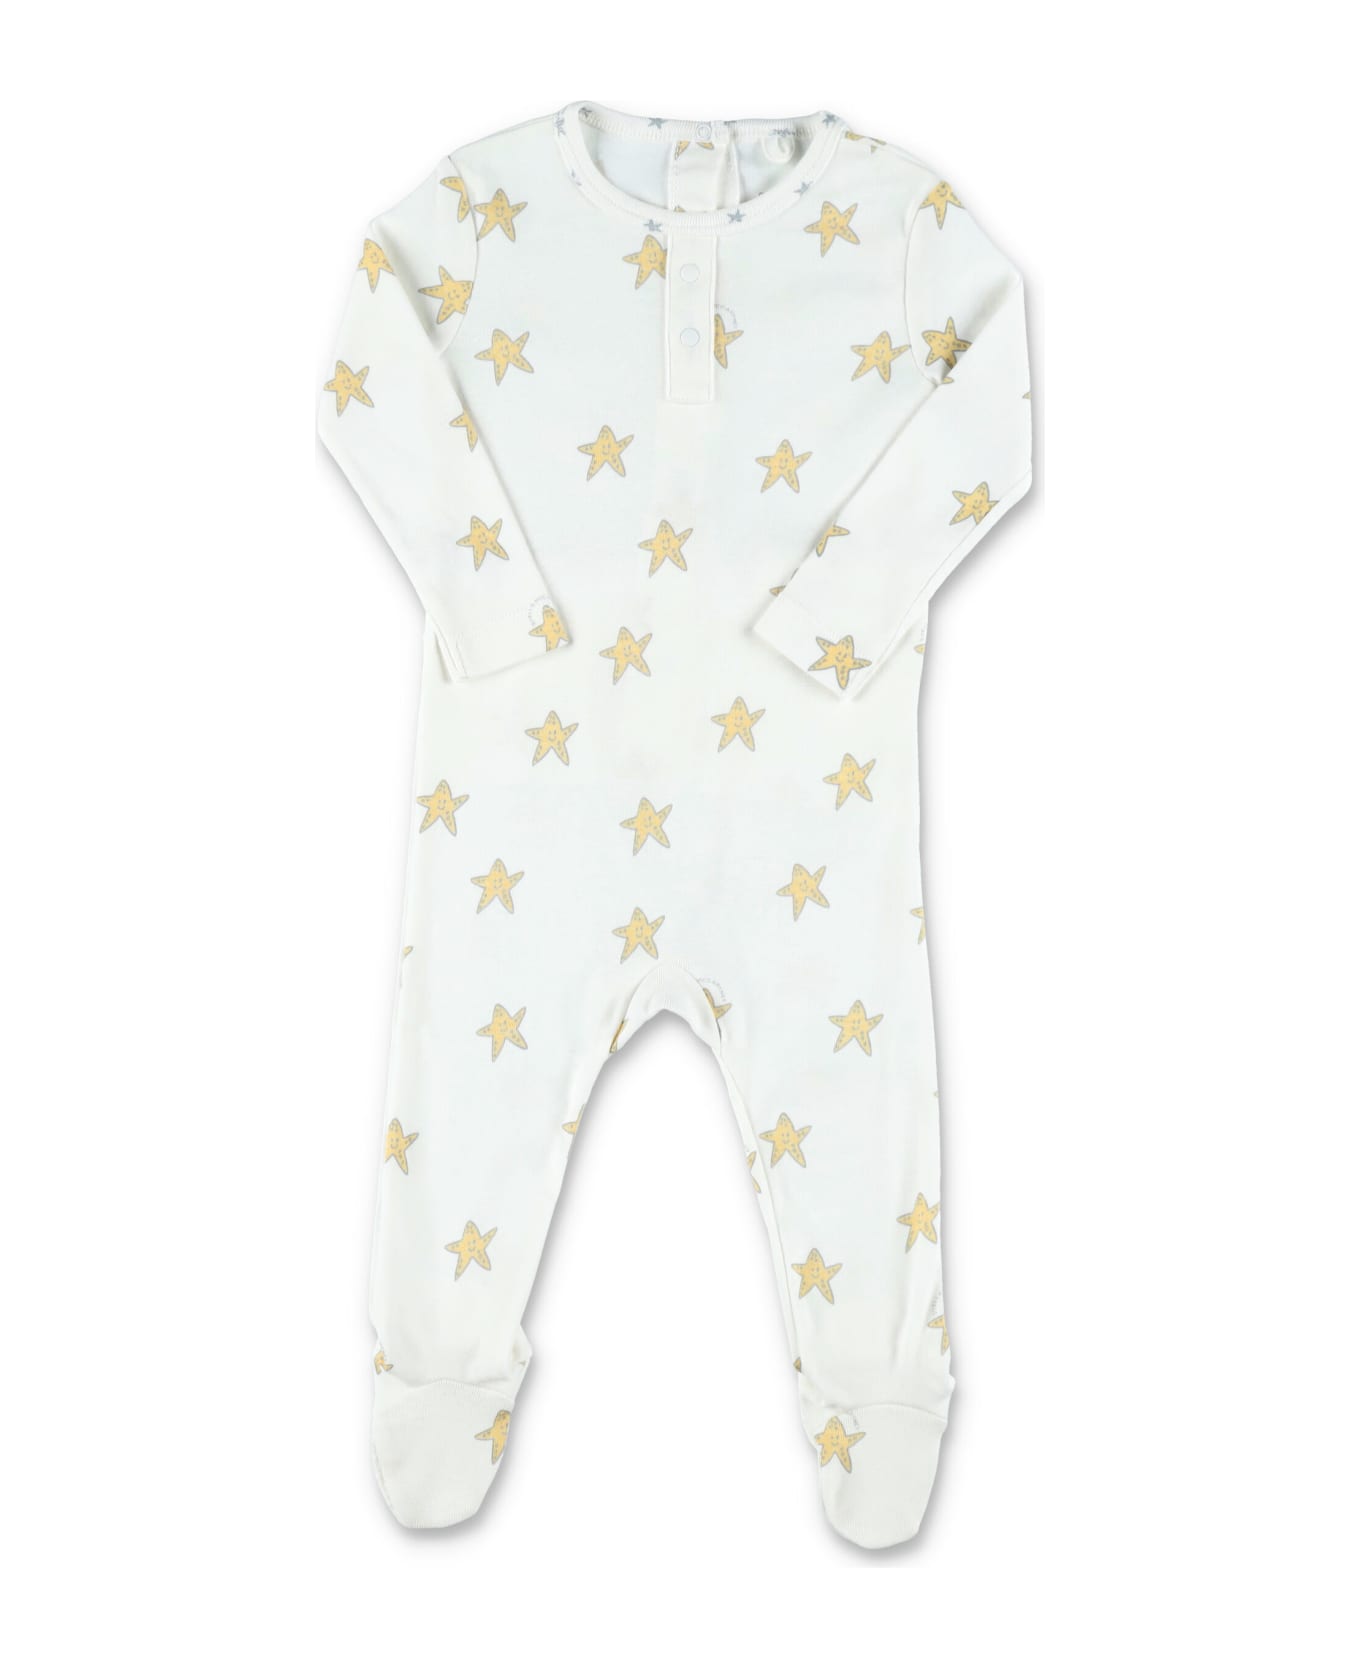 Stella McCartney Kids Smiling Star Print Baby Gift Set - WHITE